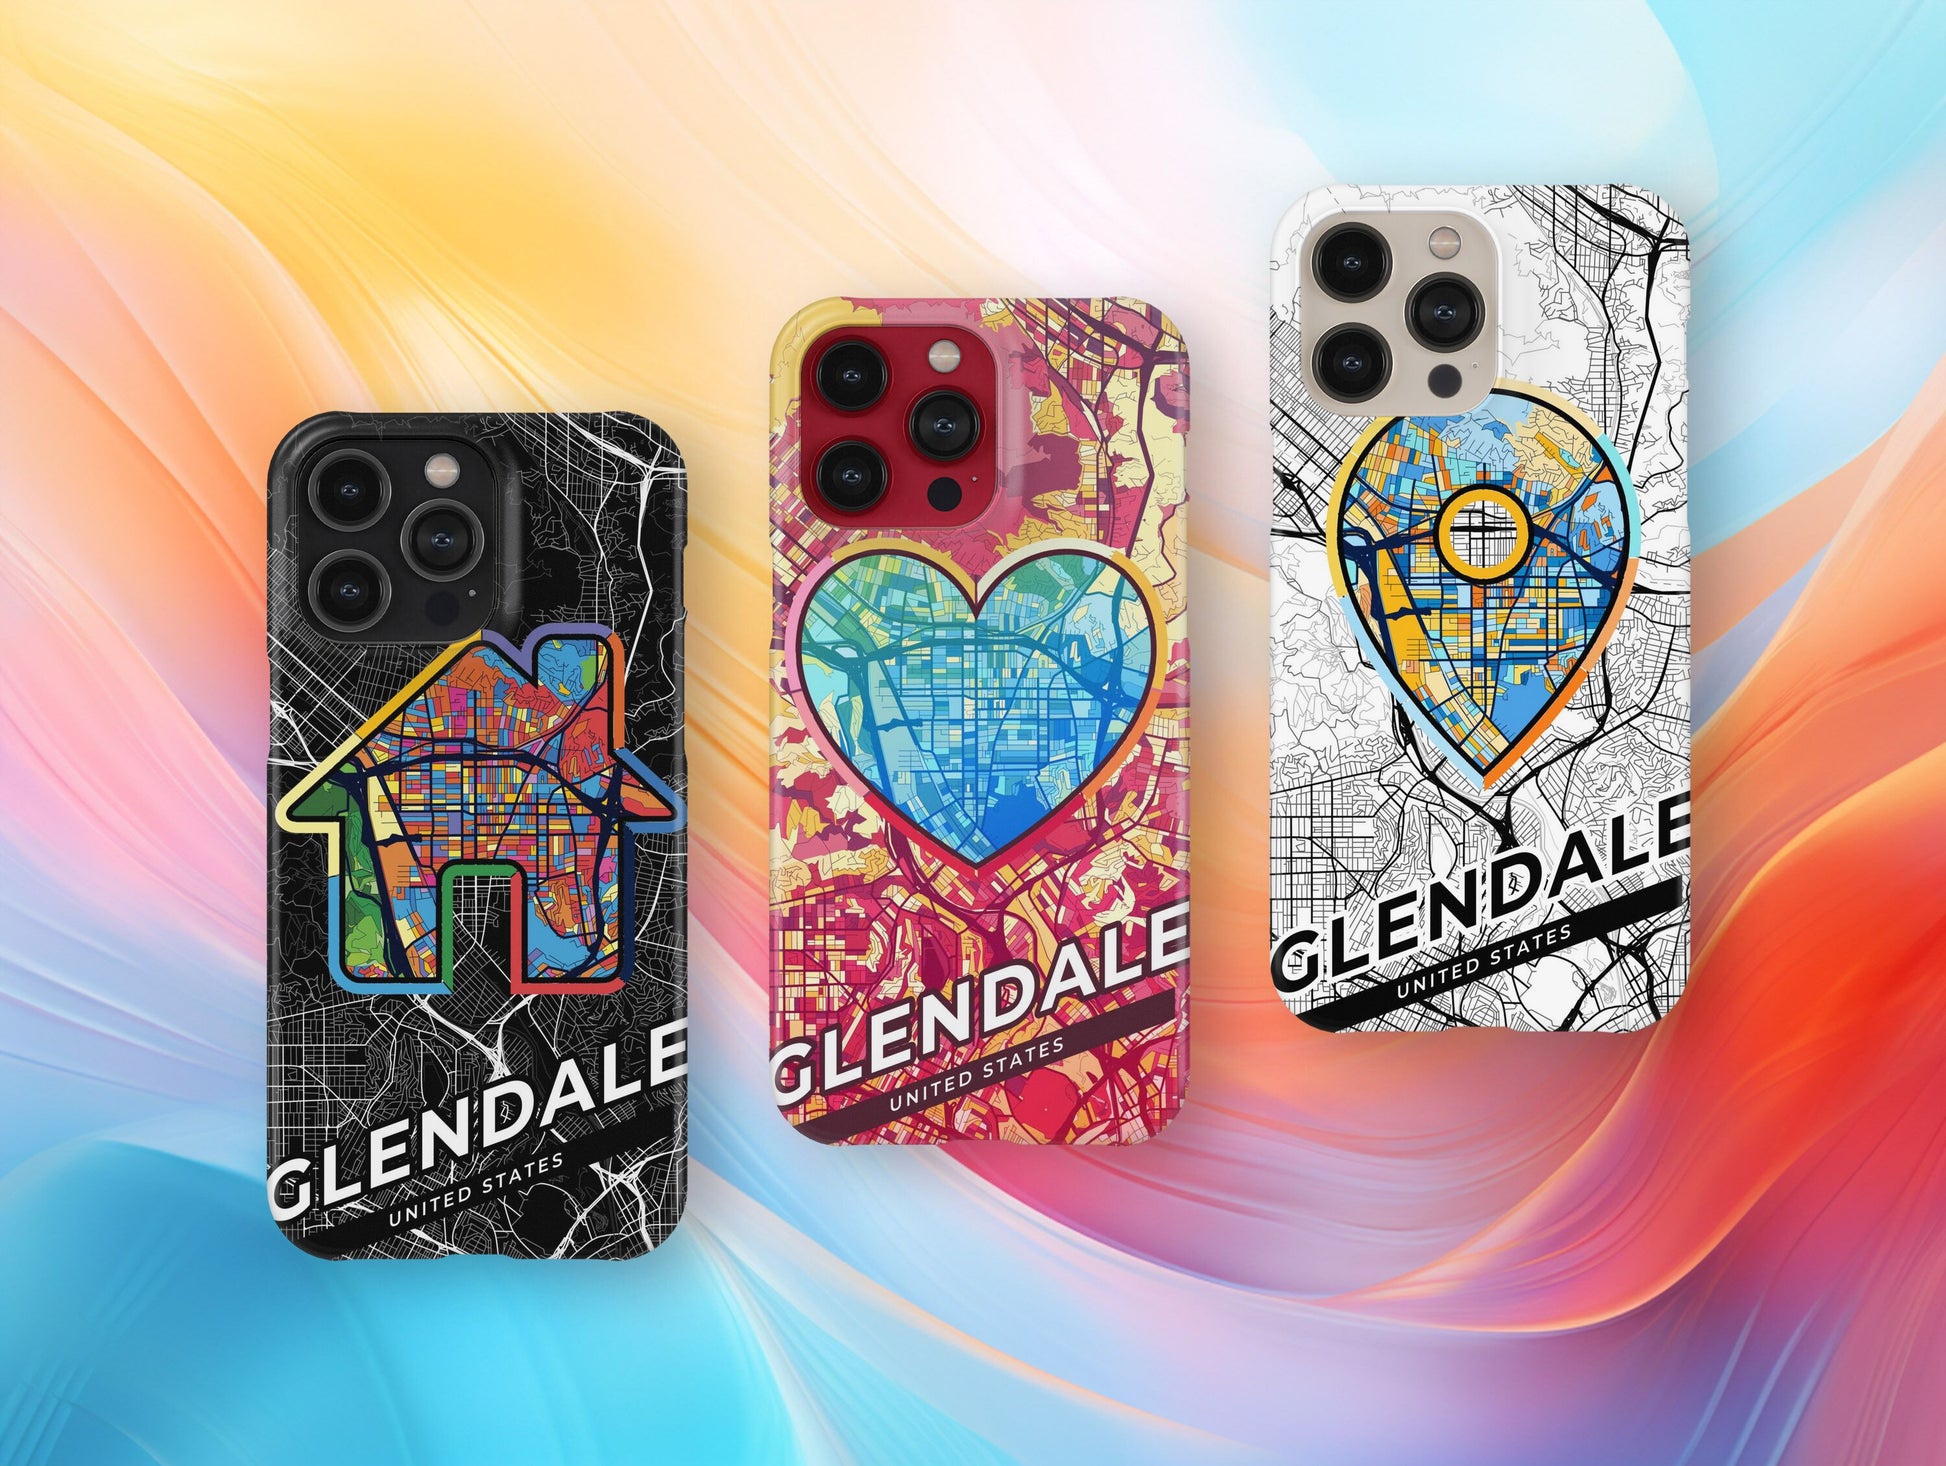 Glendale Arizona slim phone case with colorful icon. Birthday, wedding or housewarming gift. Couple match cases.